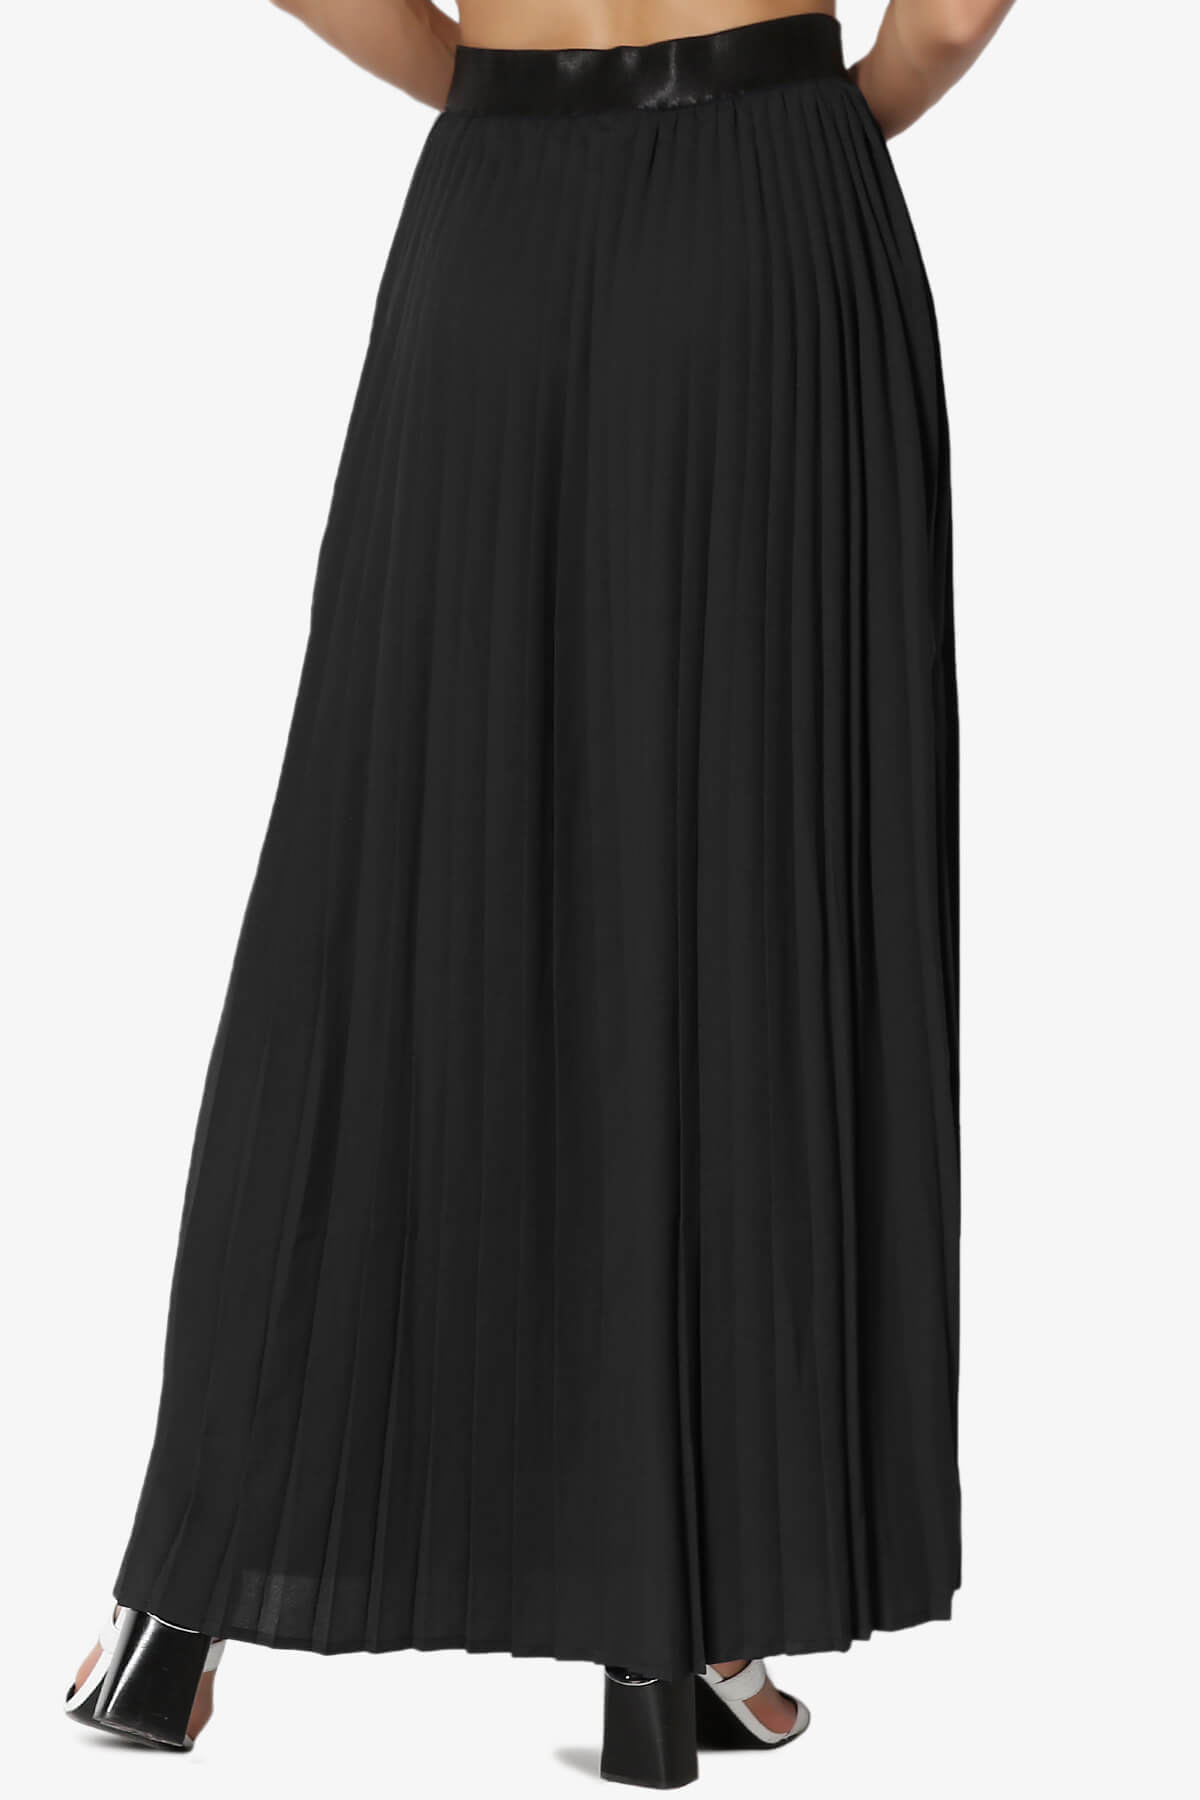 Barria Flowy Maxi Pleated Skirt BLACK_2